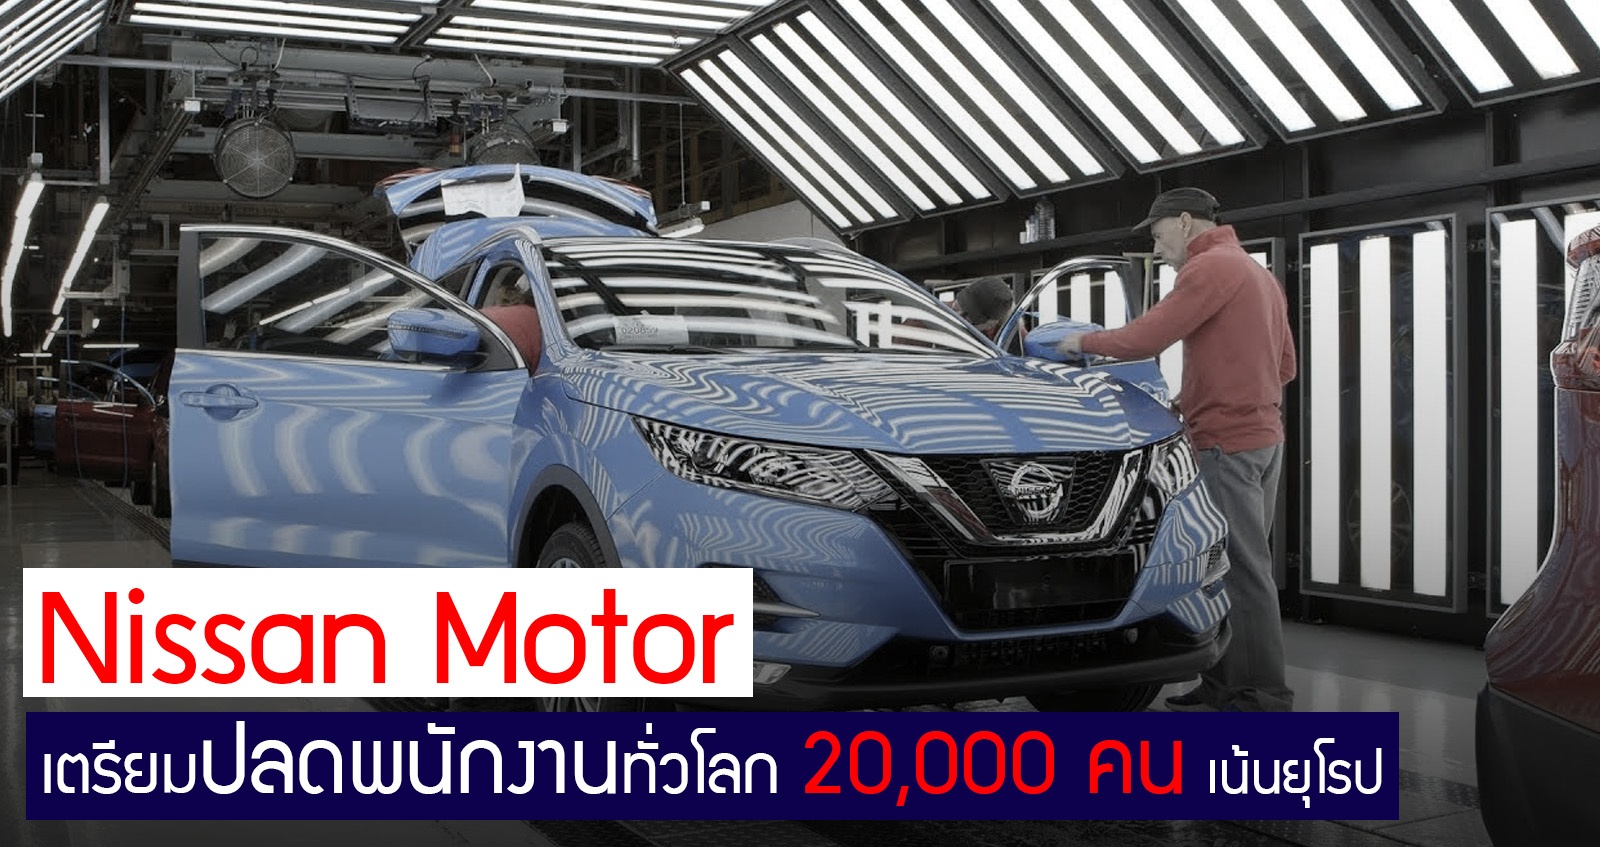 Nissan Motor เตรียมปลดพนักงาน 20,000 คนทั่วโลก เน้นยุโรป และ ประเทศกำลังพัฒนา